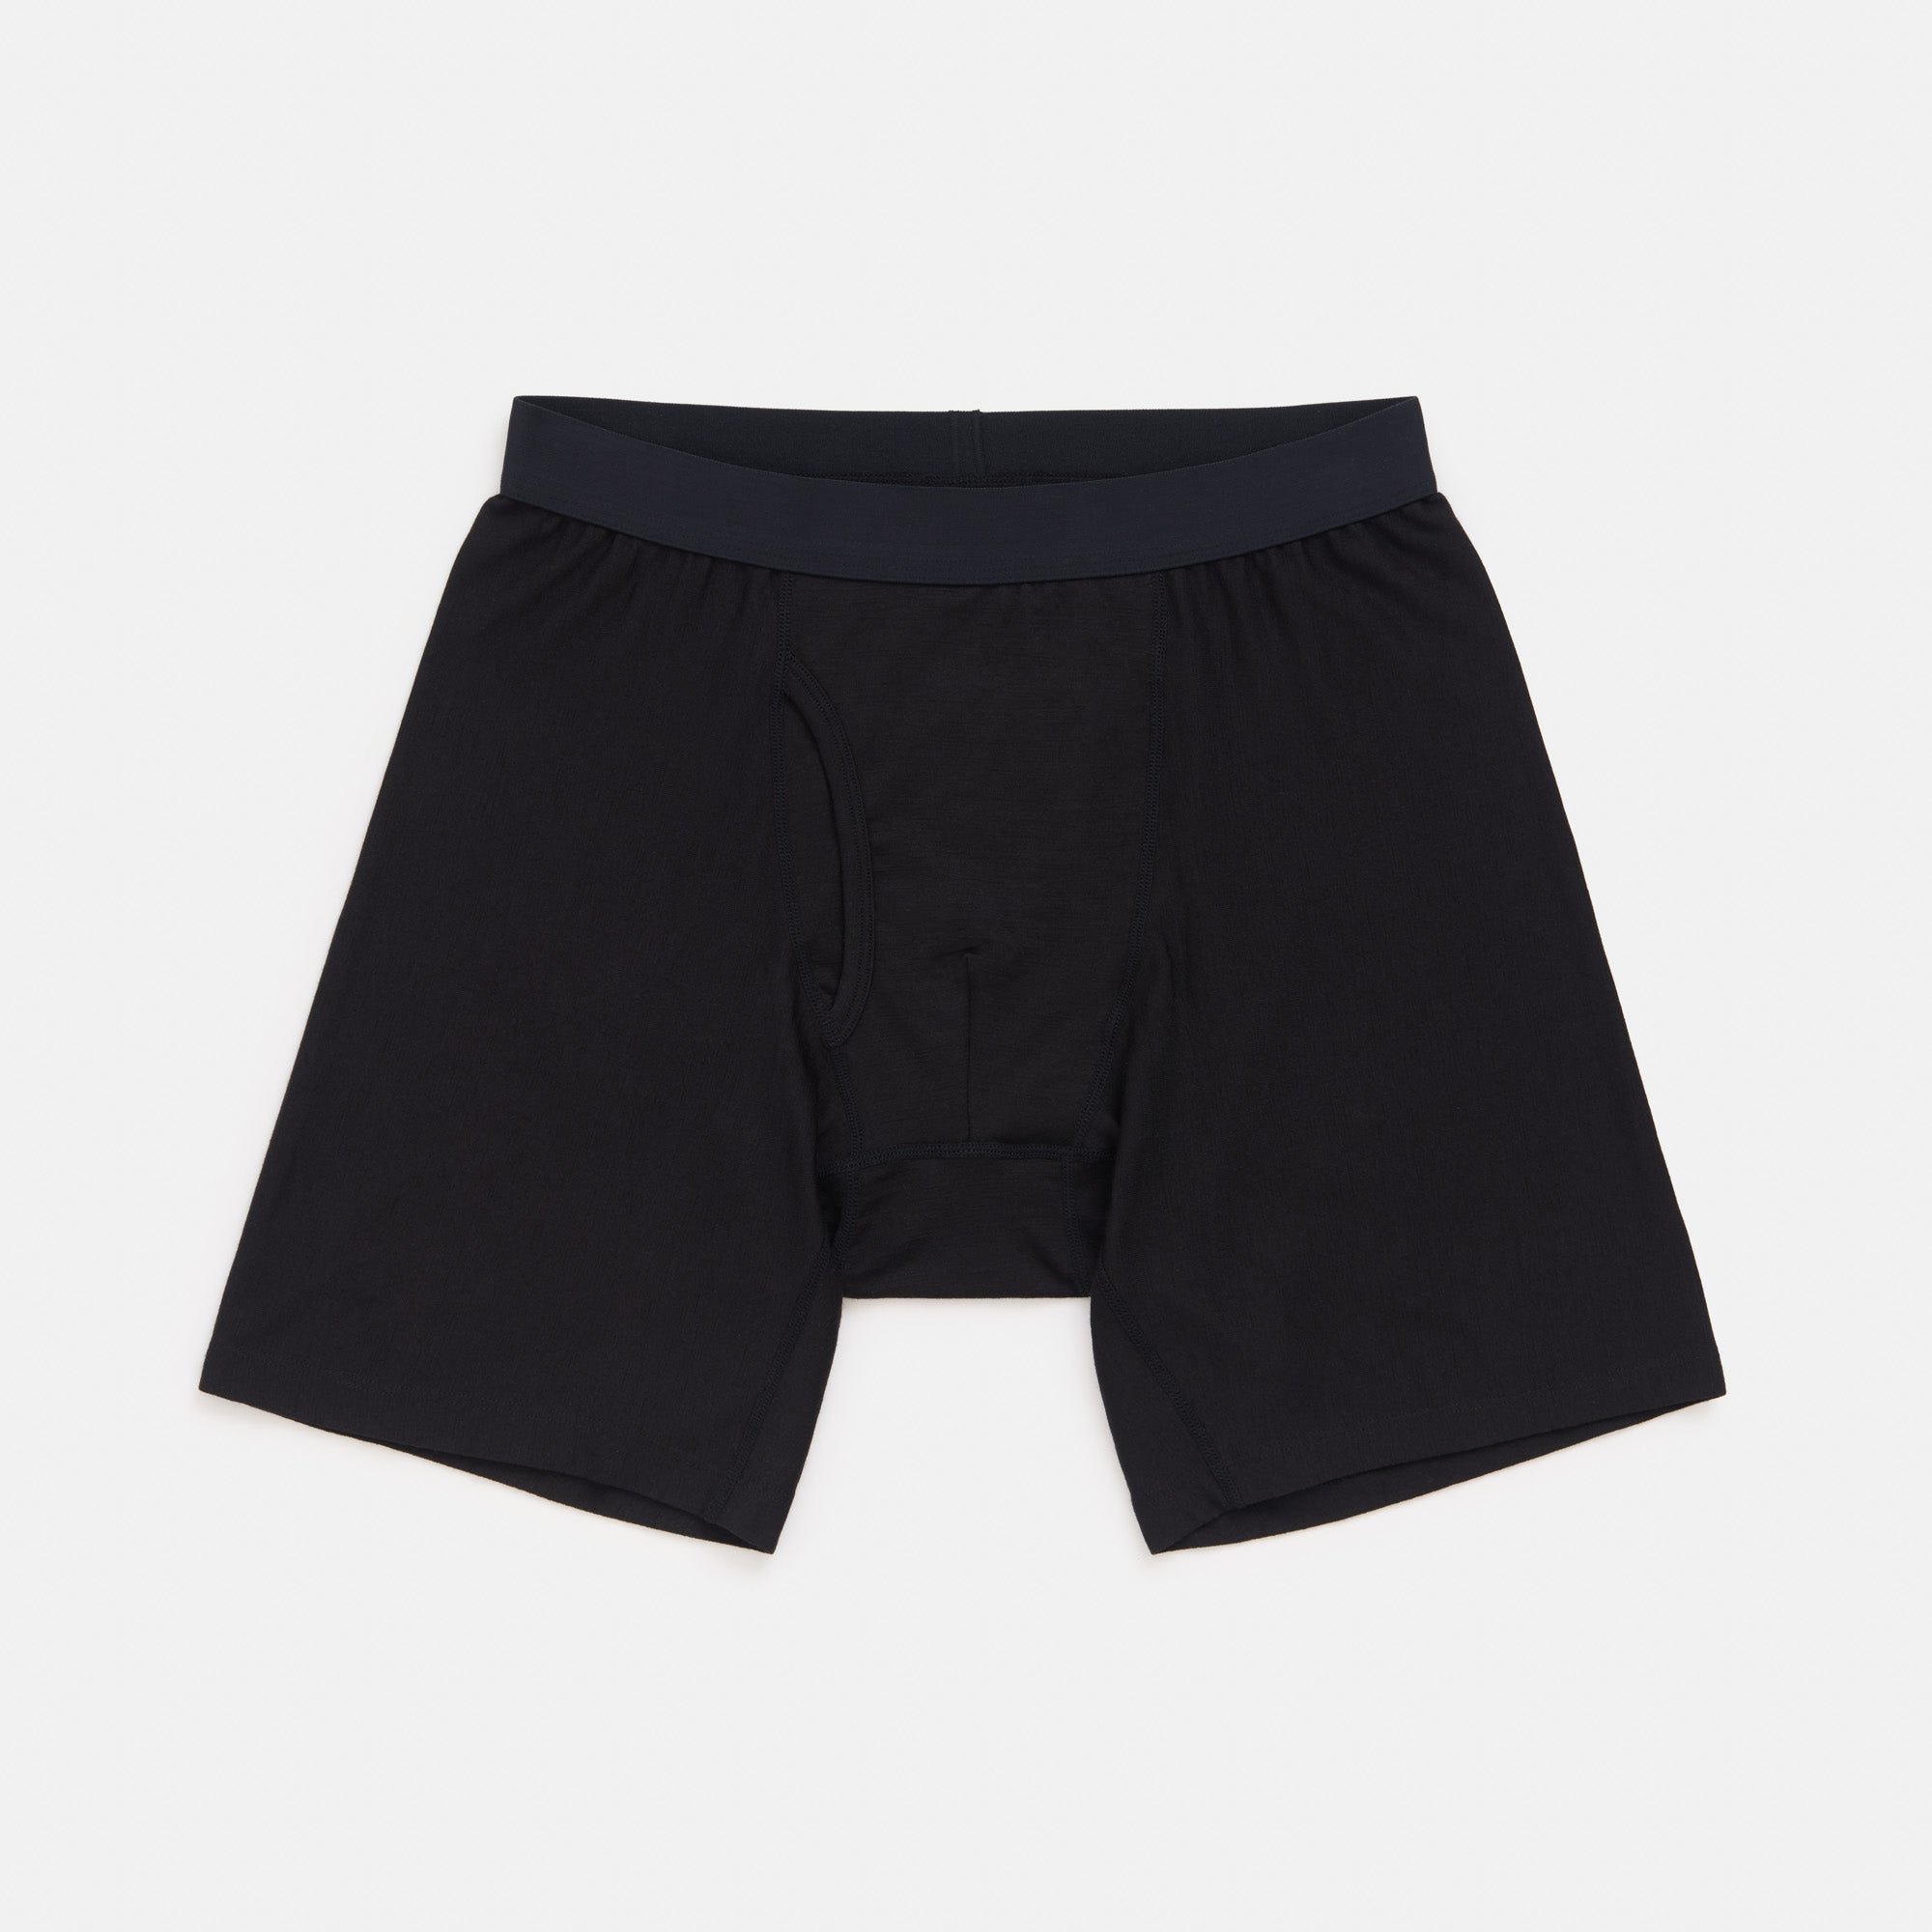 MERIWOOL Merino Wool Men's Boxer Brief Underwear - Black